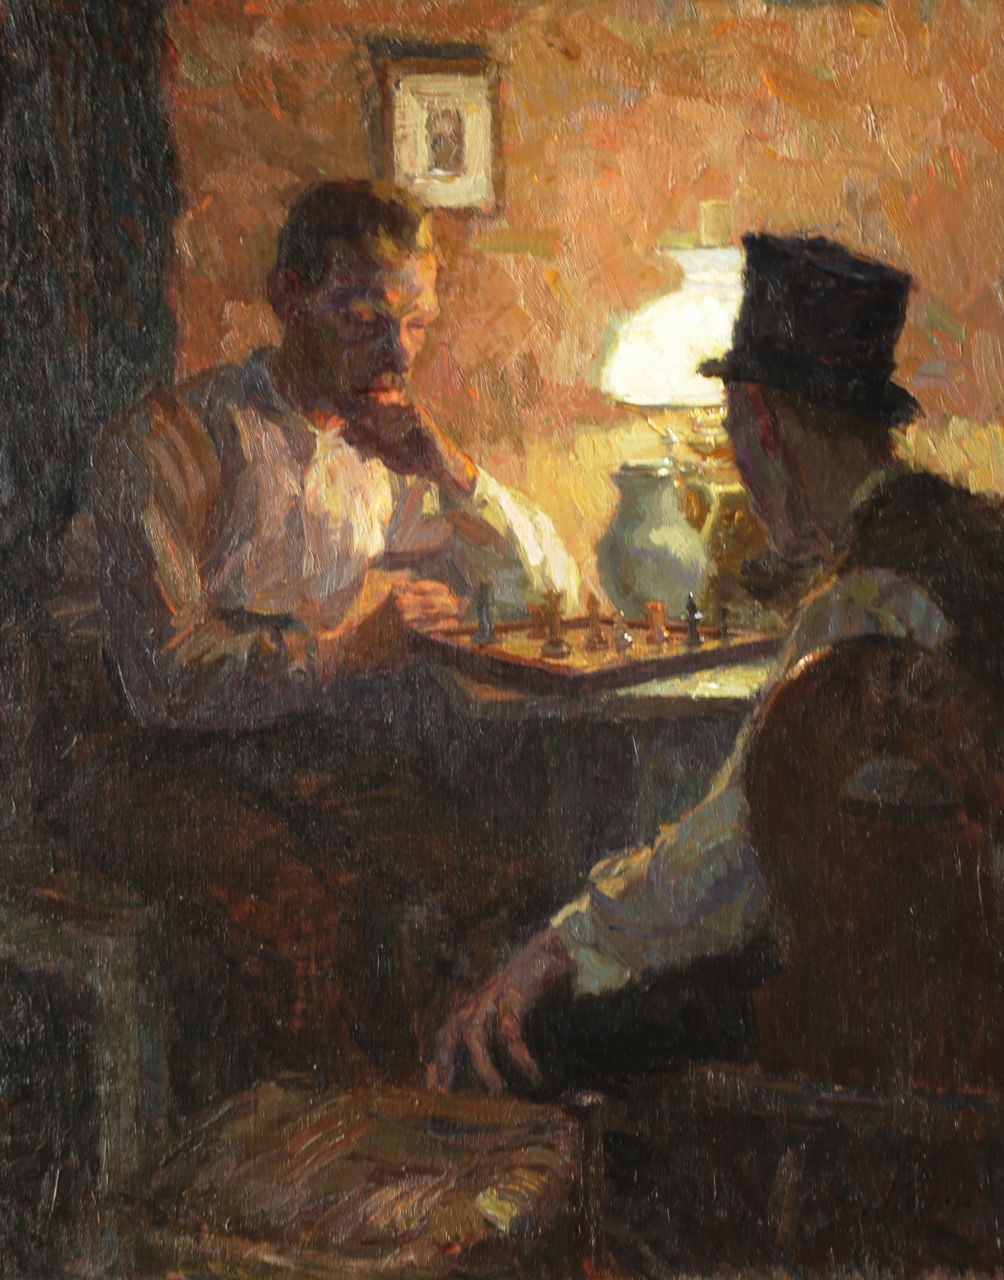 Köhler A.  | August Köhler, Schaakspel bij lamplicht, olieverf op doek 84,5 x 67,0 cm, gesigneerd rechtsonder